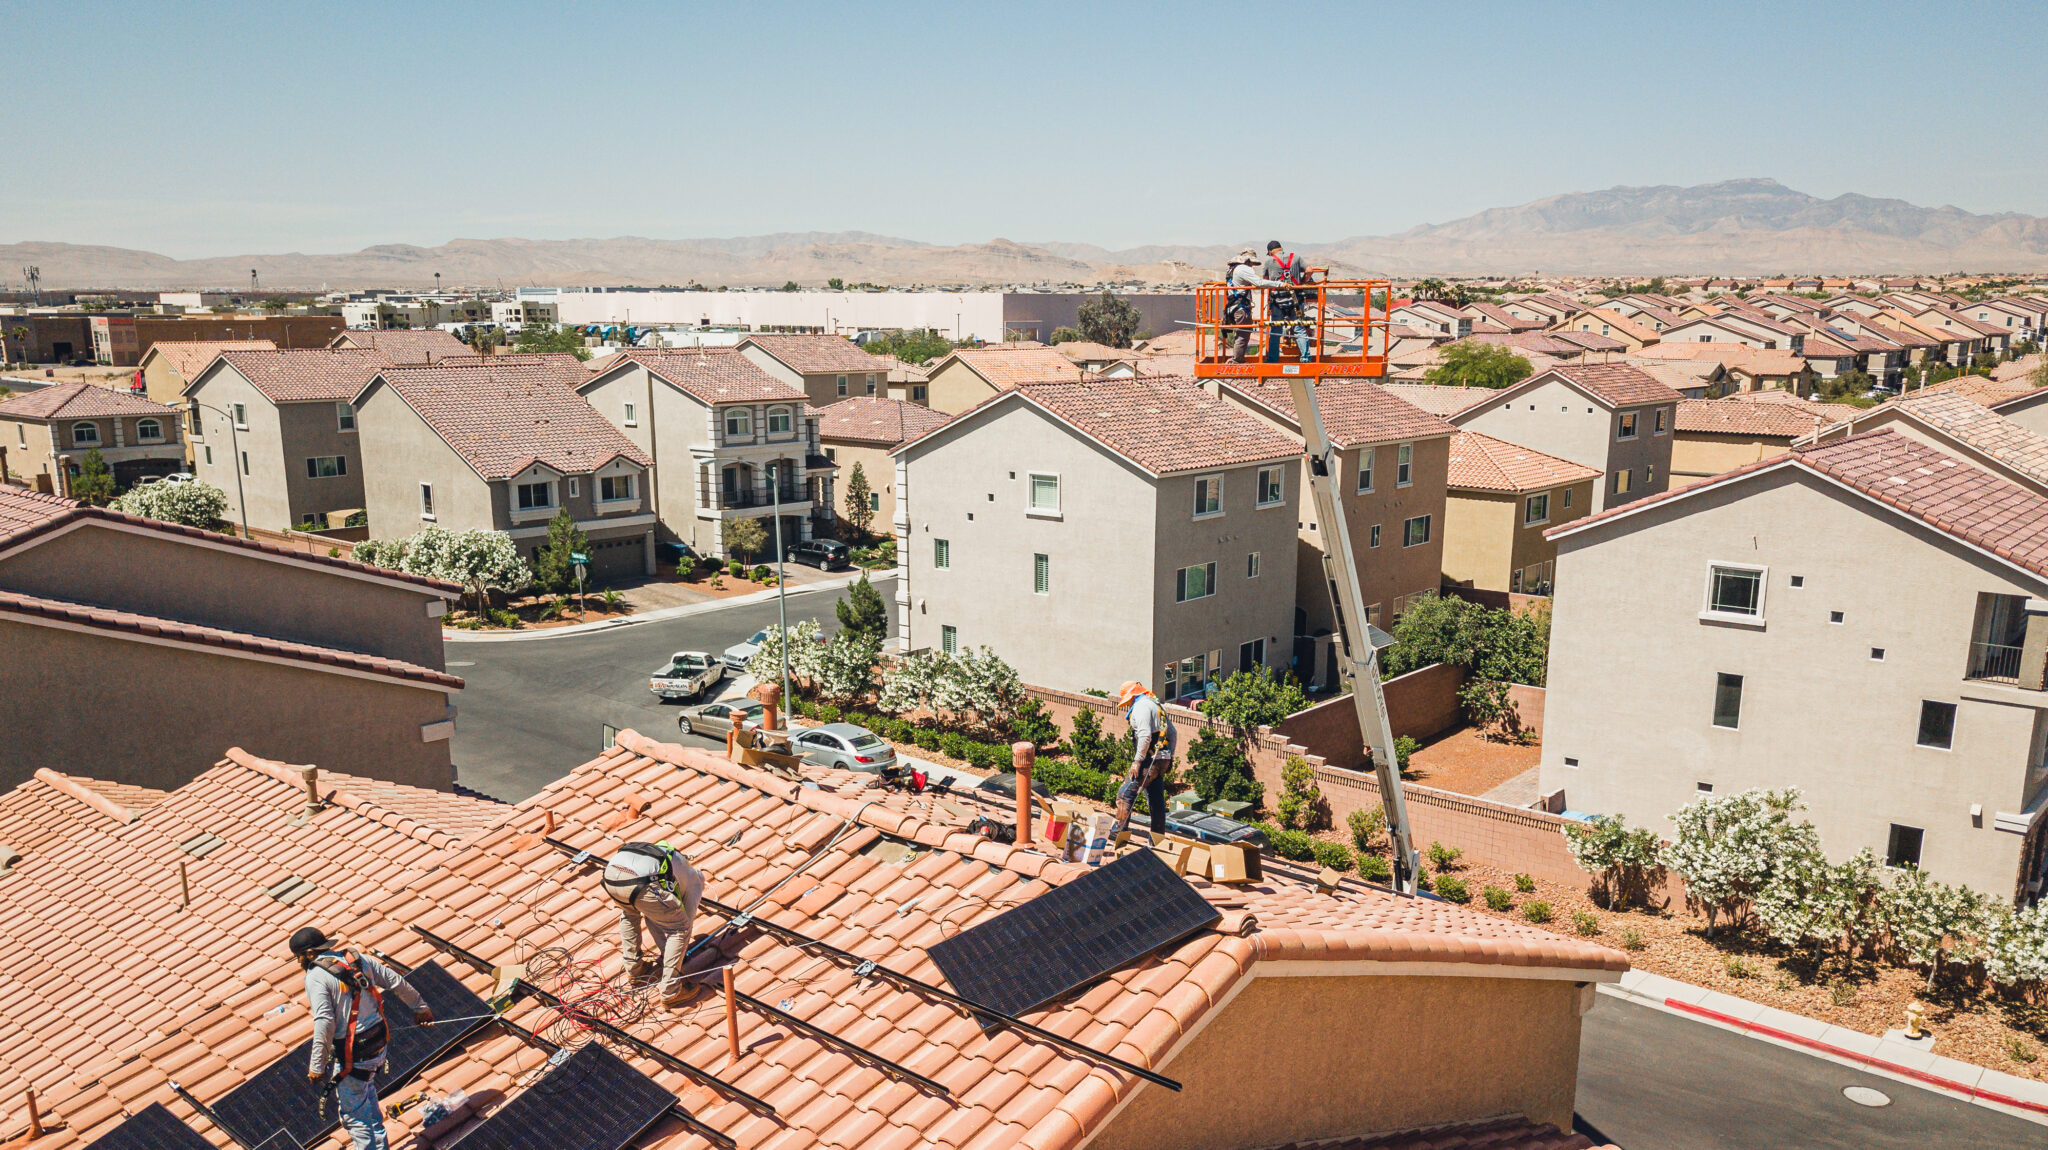 Solar panels installed in a Las Vegas neighborhood.